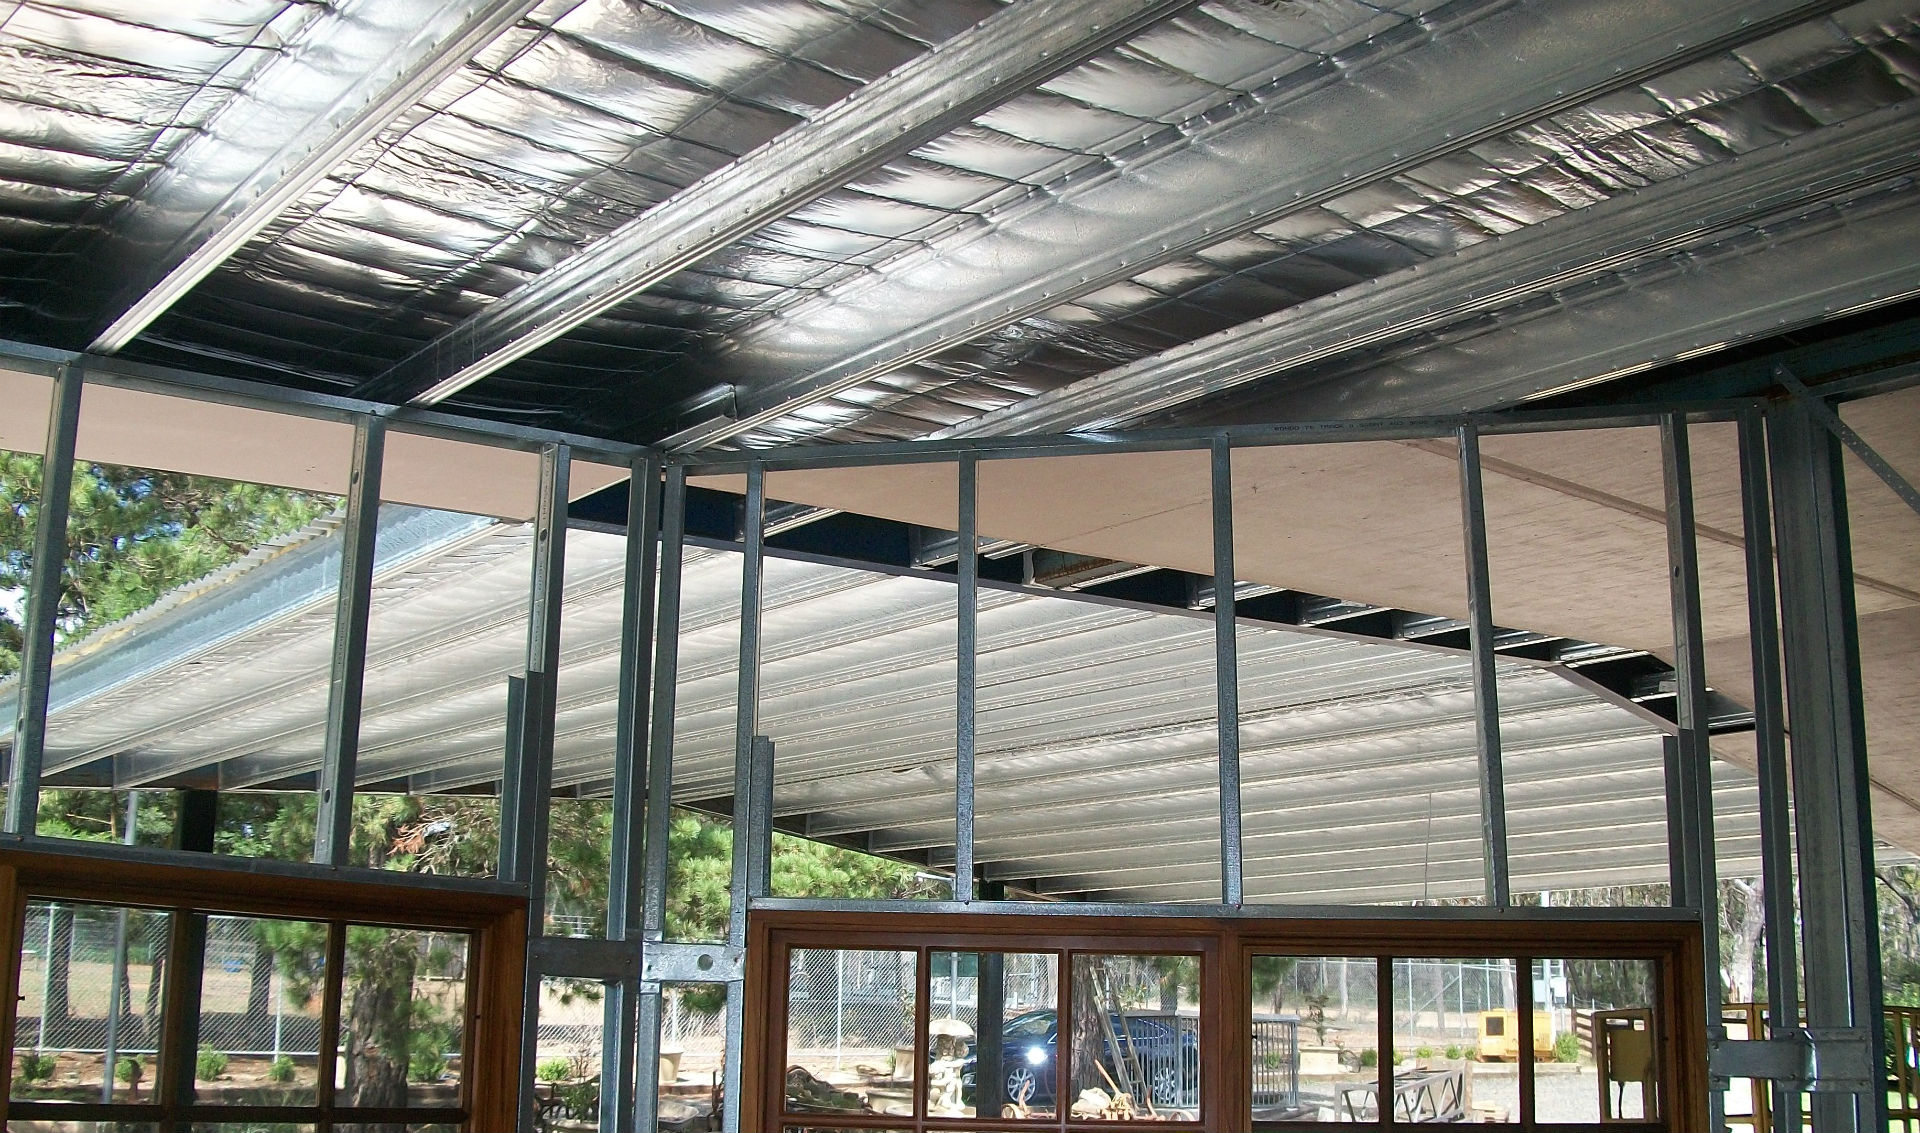 Skillion roof and carport canopy